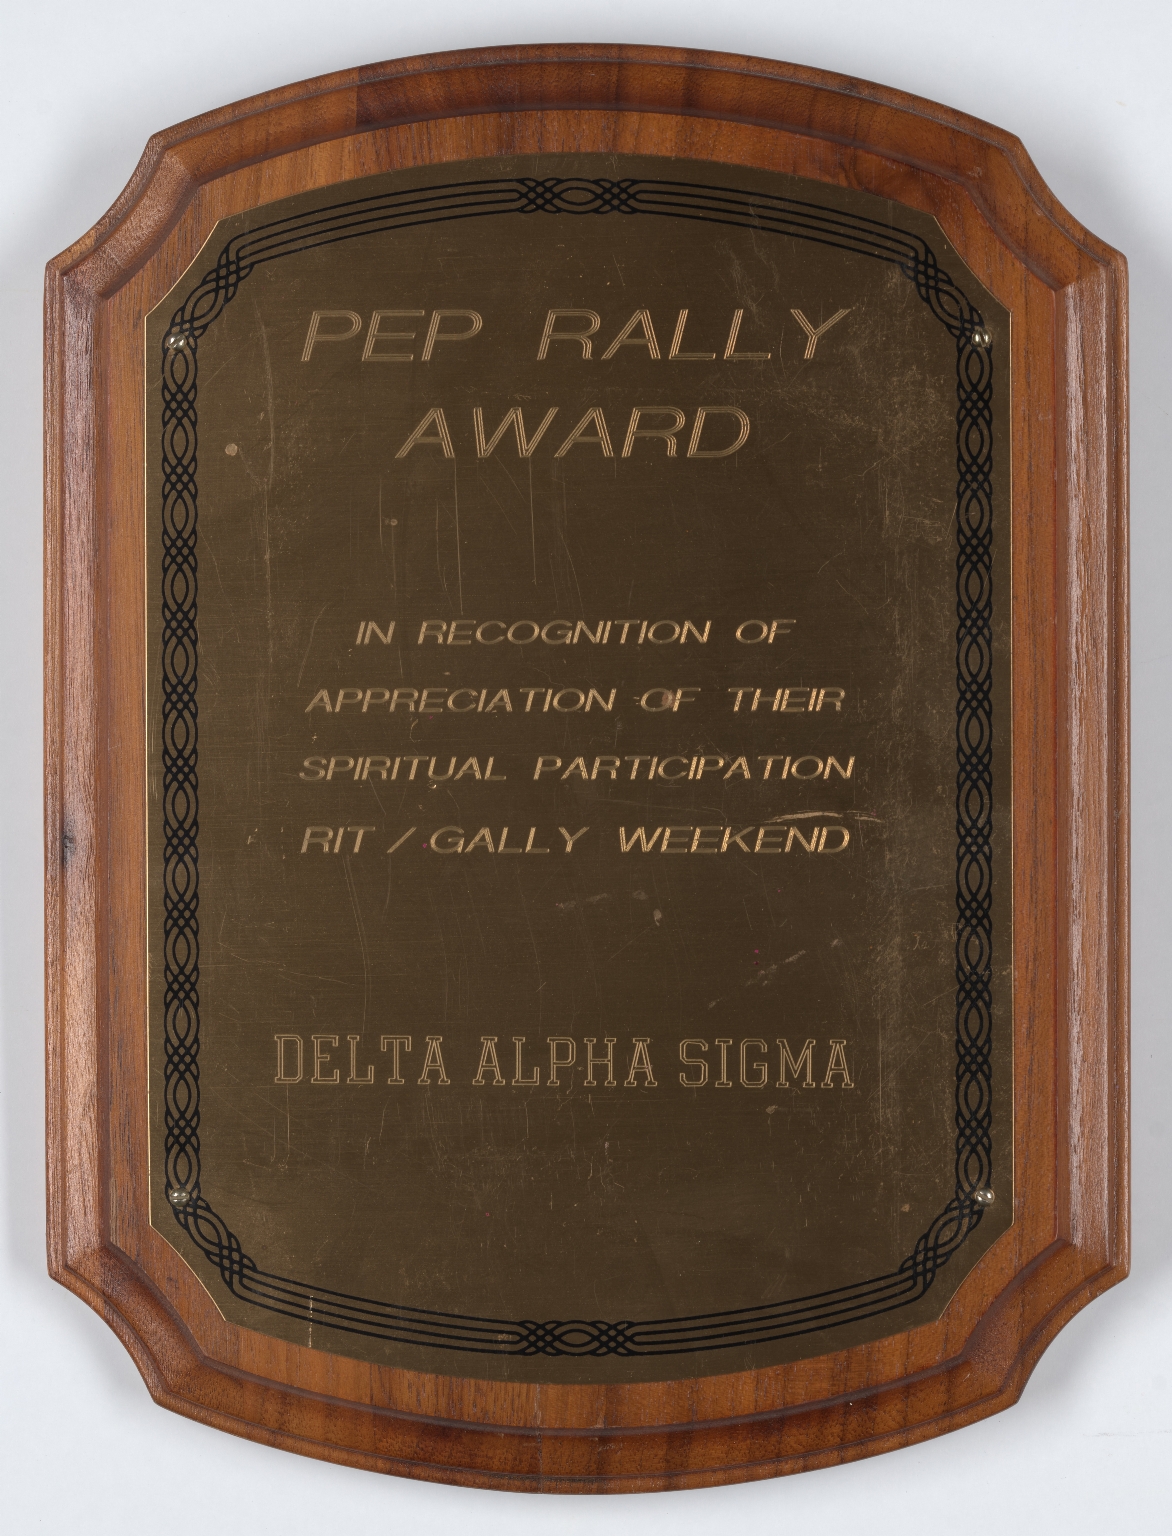 Pep Rally Award plaque